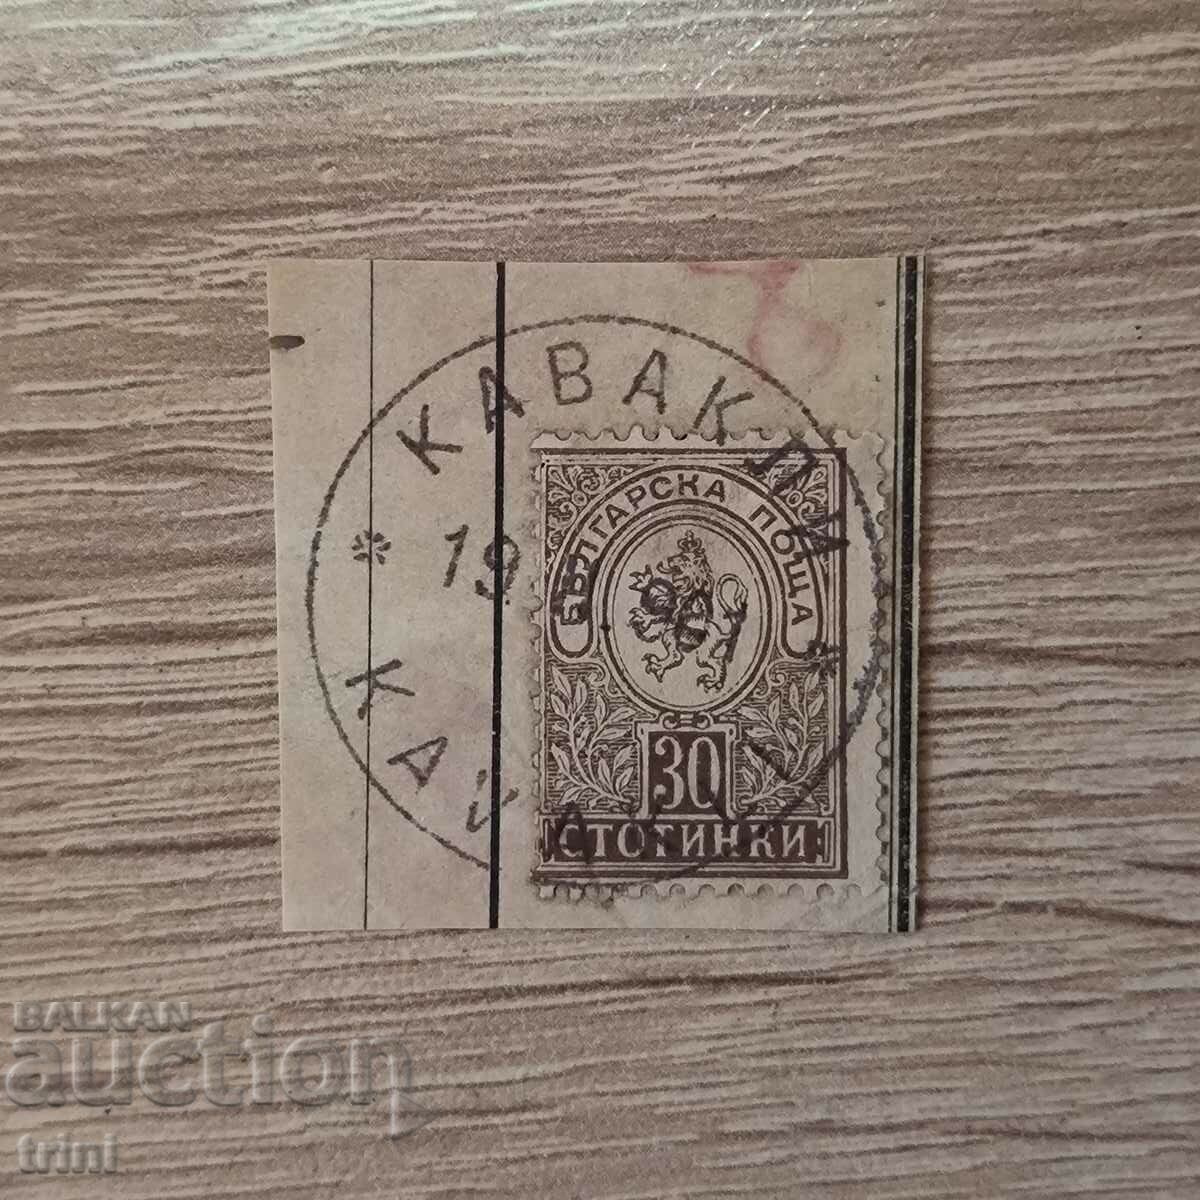 Little lion 1889 30 cents stamp Kavakli (Topolovgrad)